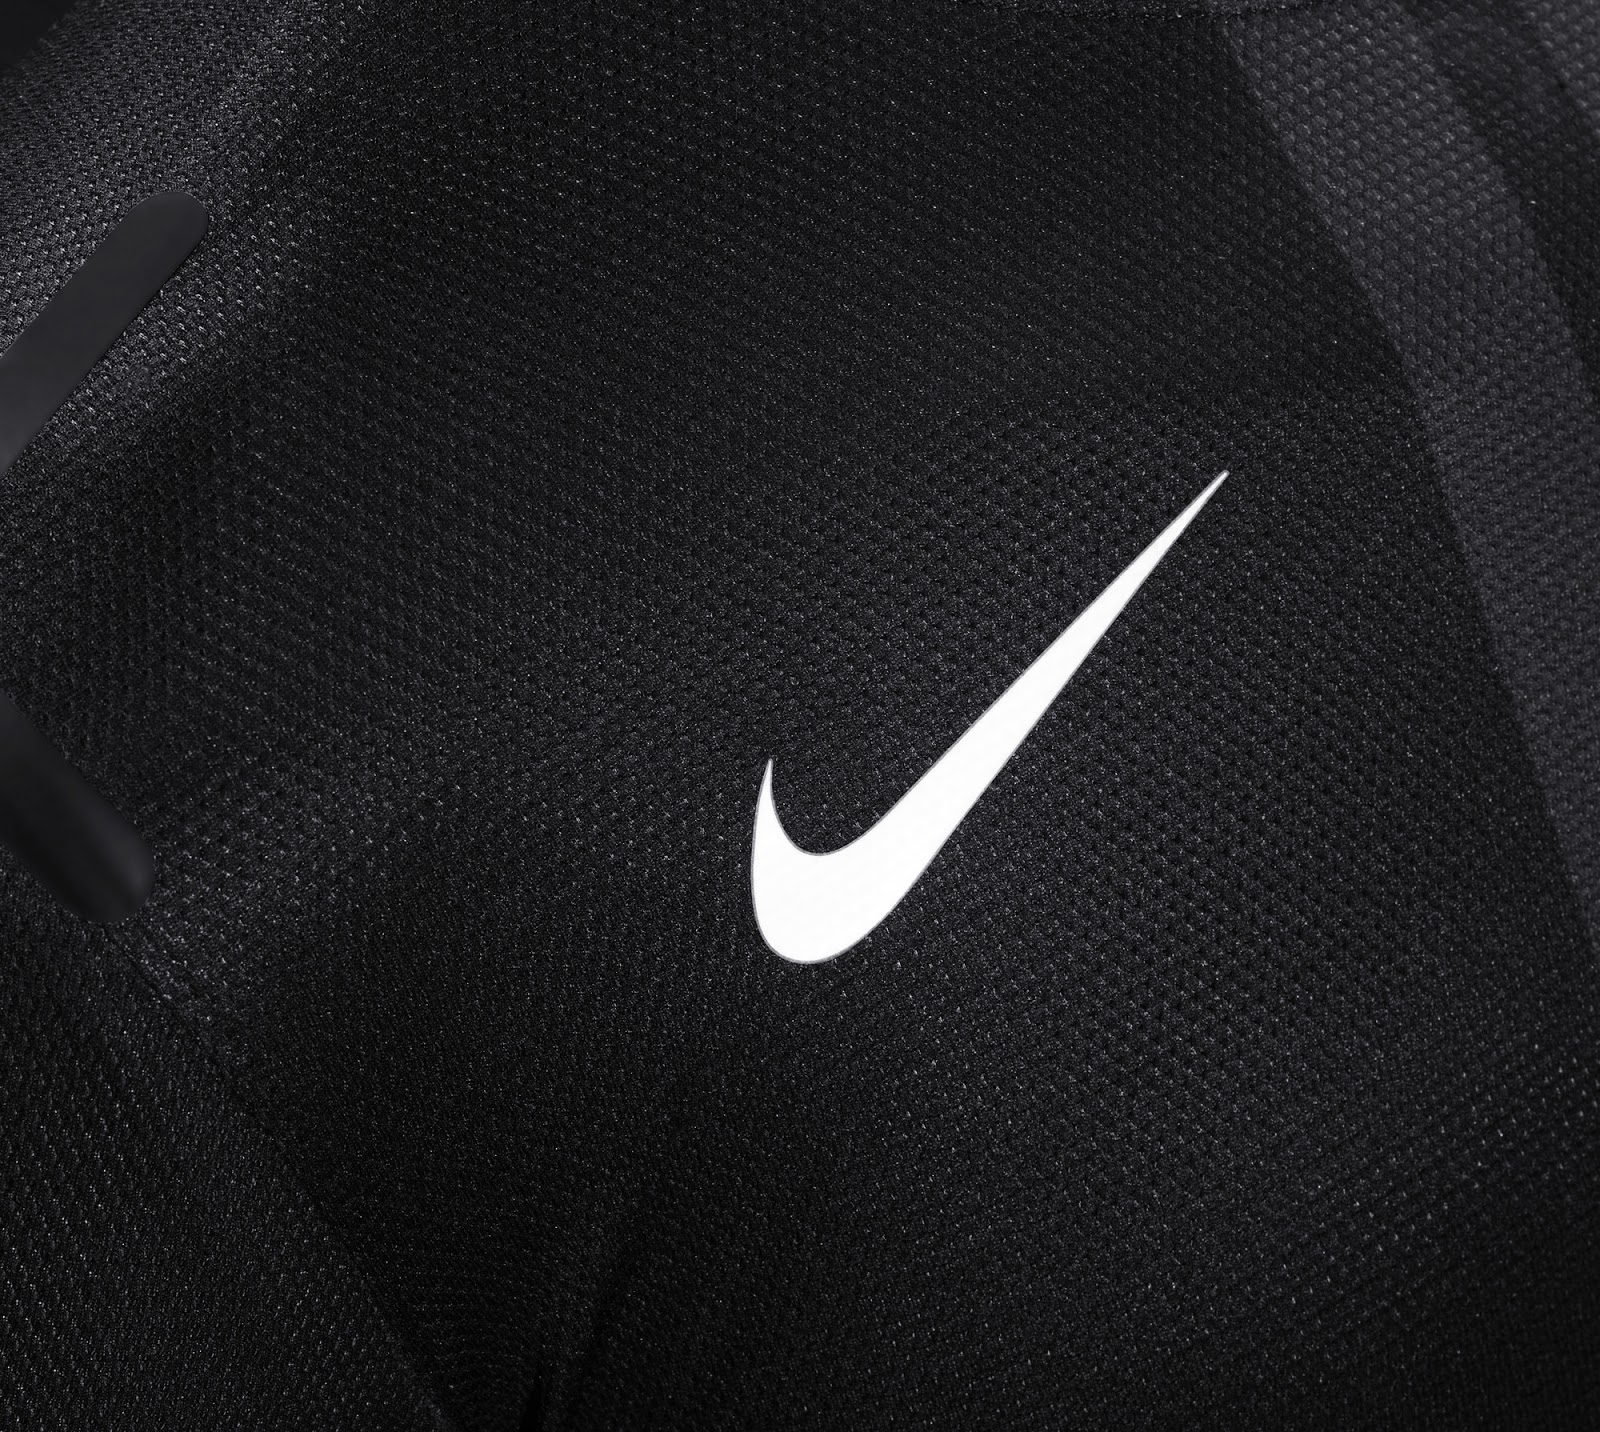 Portugal 13/14 Nike Away Shirt Released! - Footy Headlines